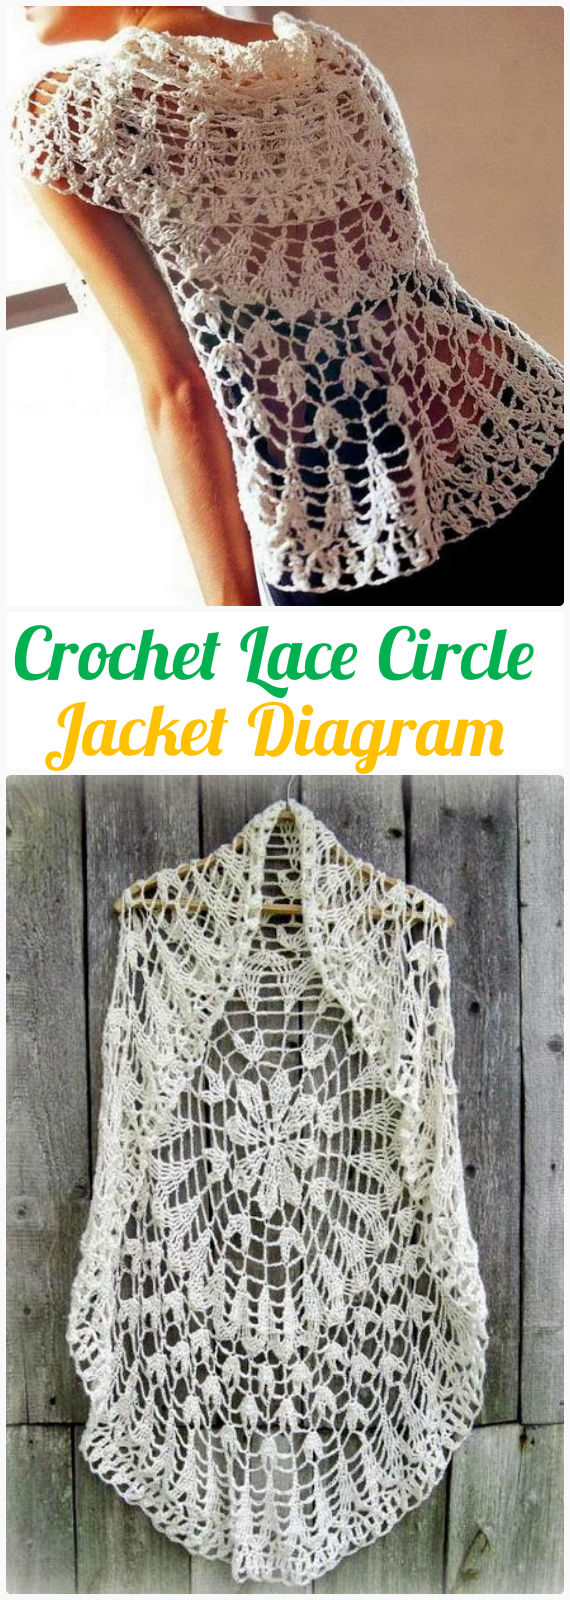 DIY Crochet Lace Circle Jacket Free Diagram -Crochet Circular Vest Sweater Jacket Patterns